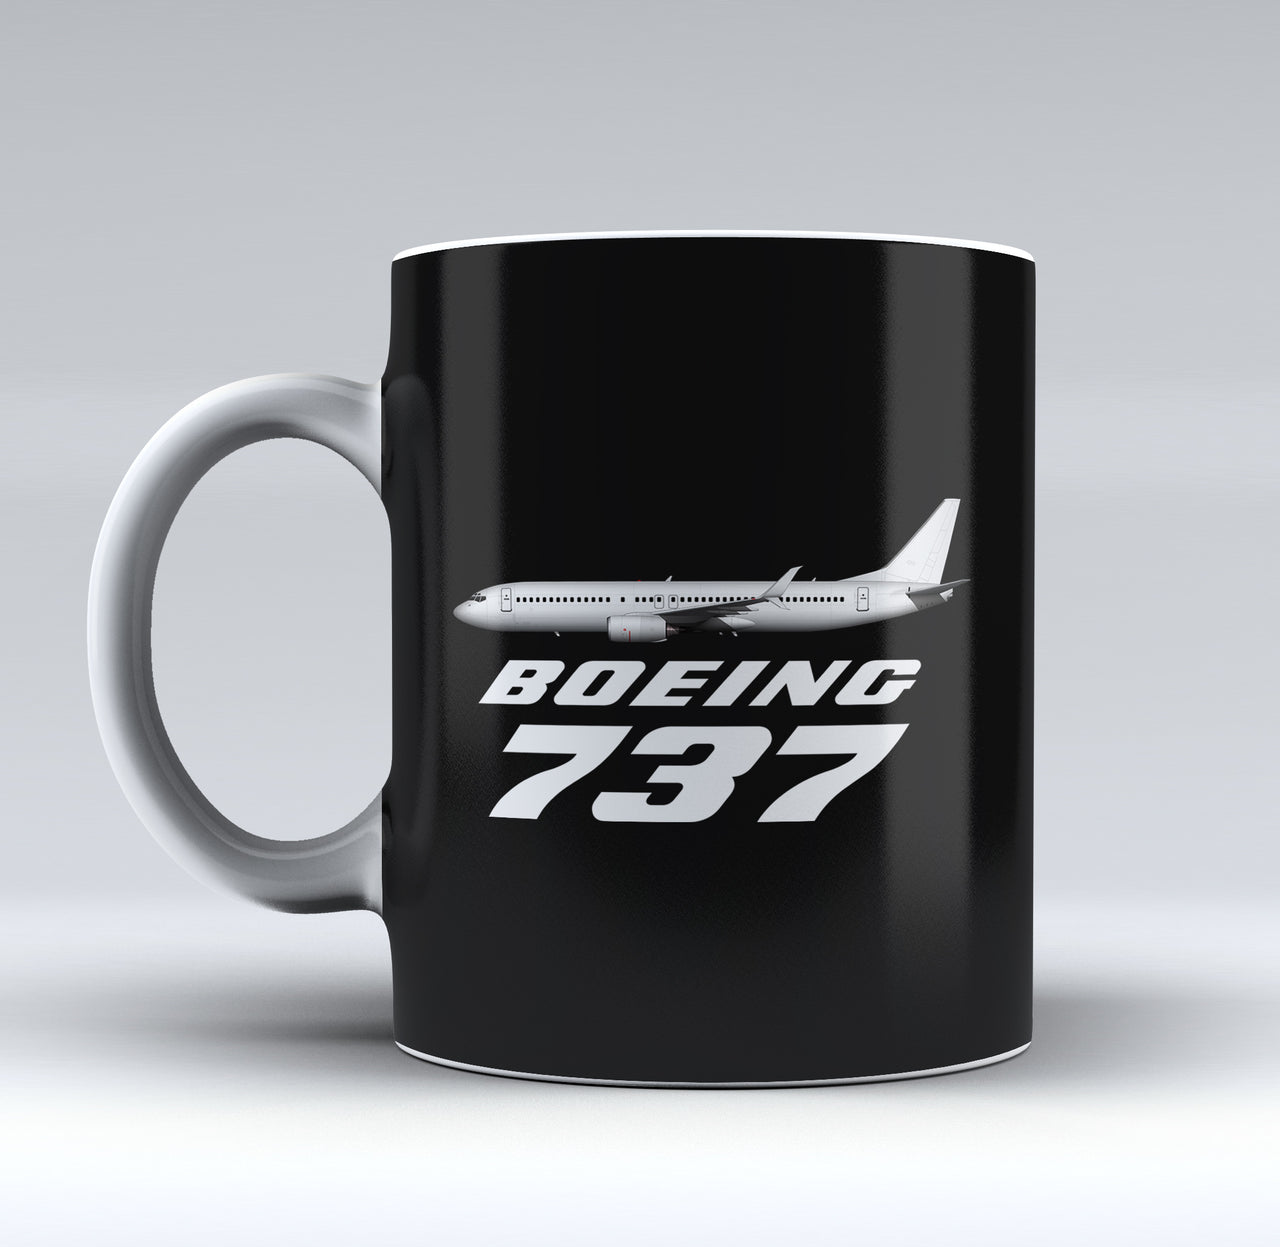 The Boeing 737 Designed Mugs